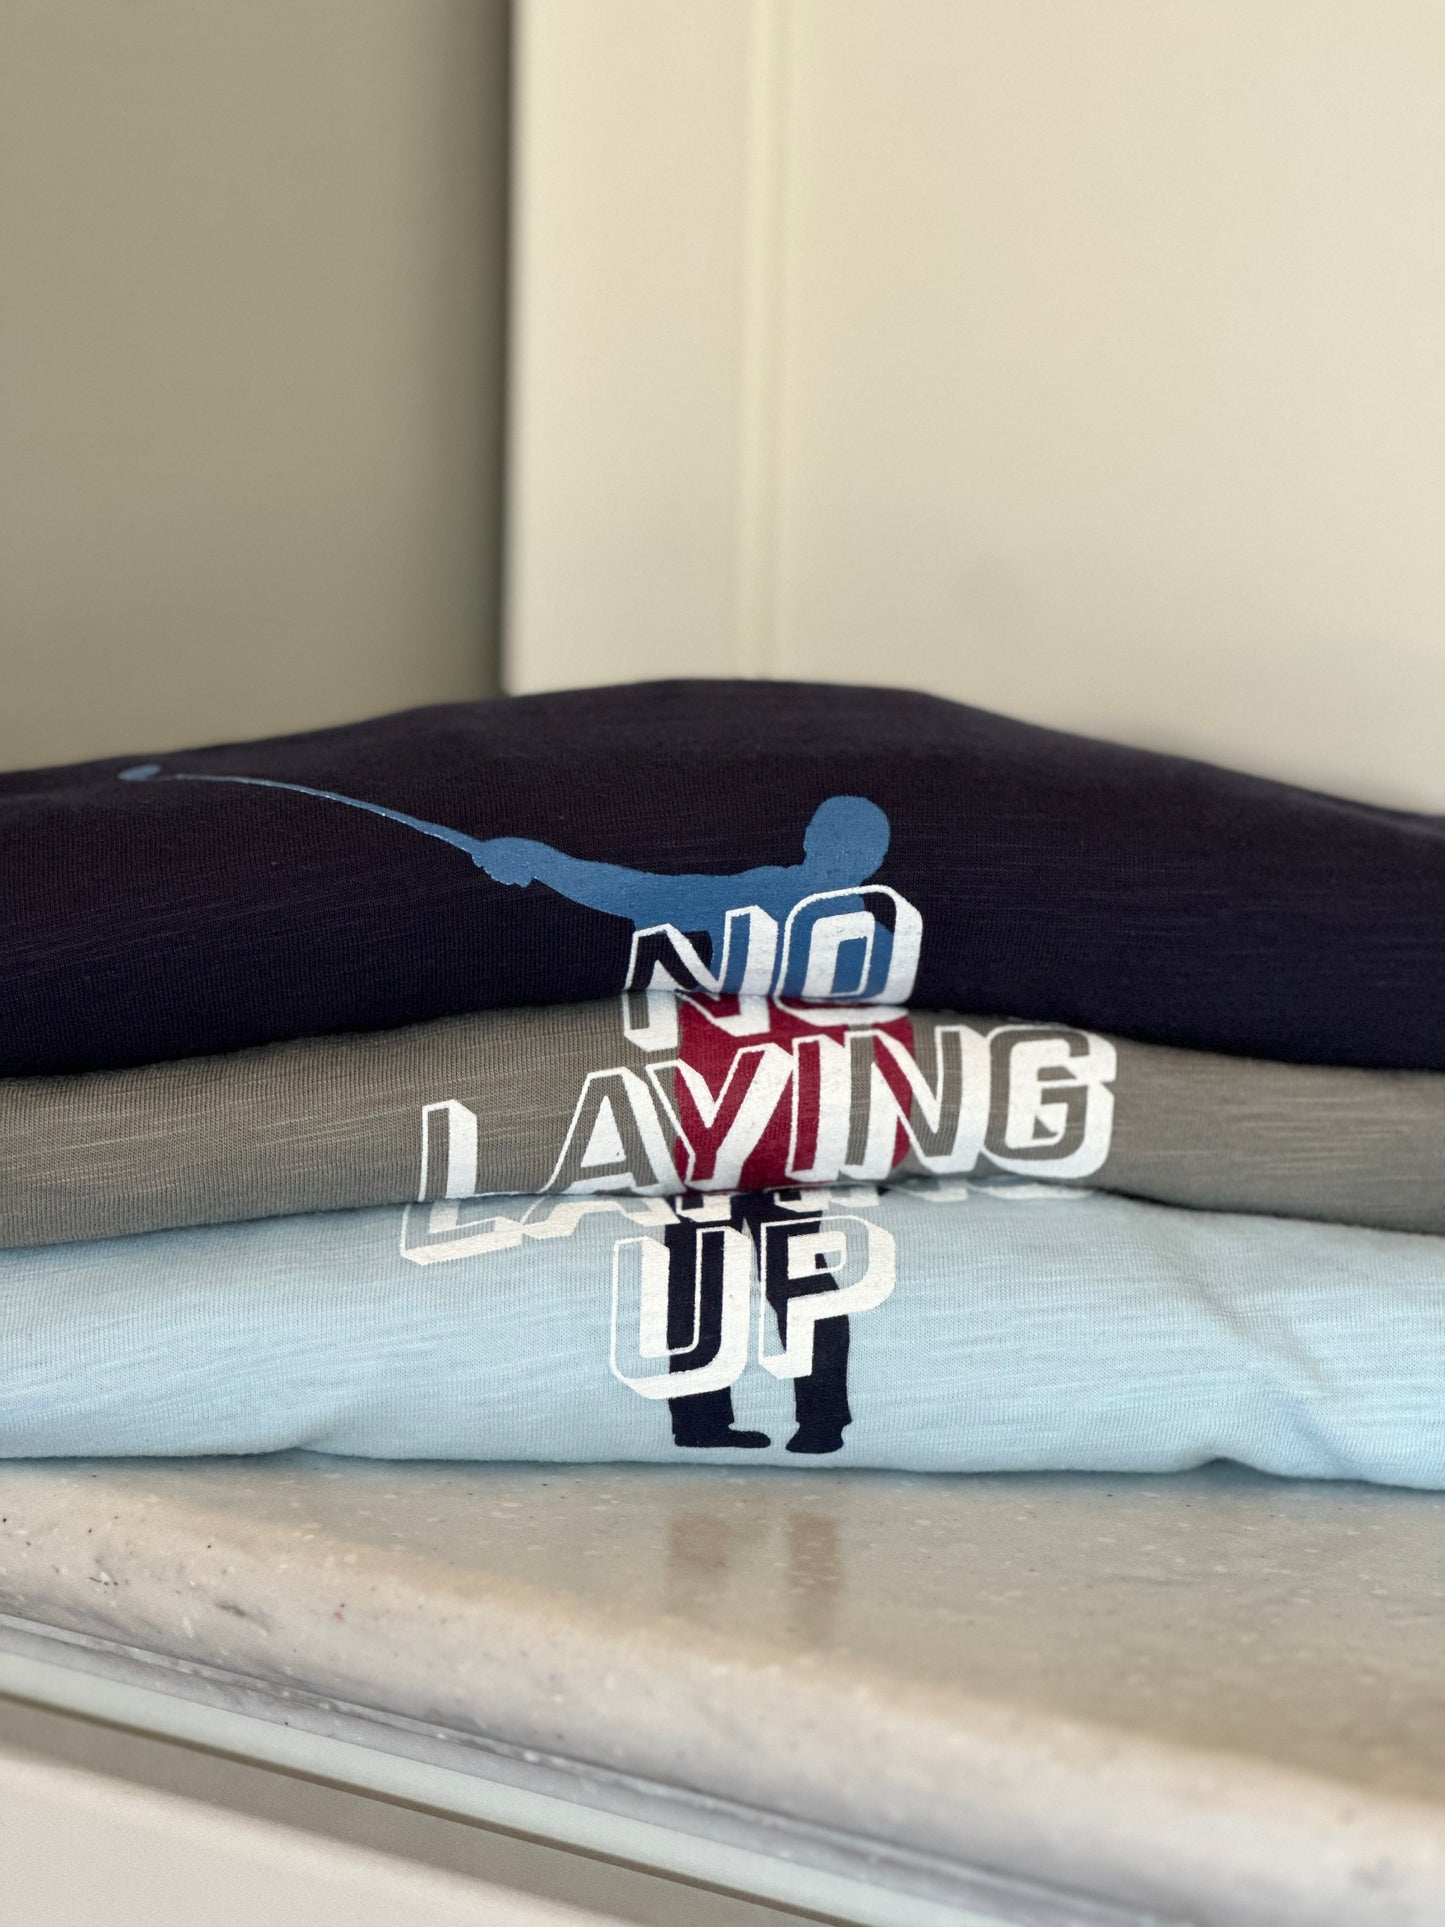 NLU Retro Wayward T-Shirt by Levelwear | Navy